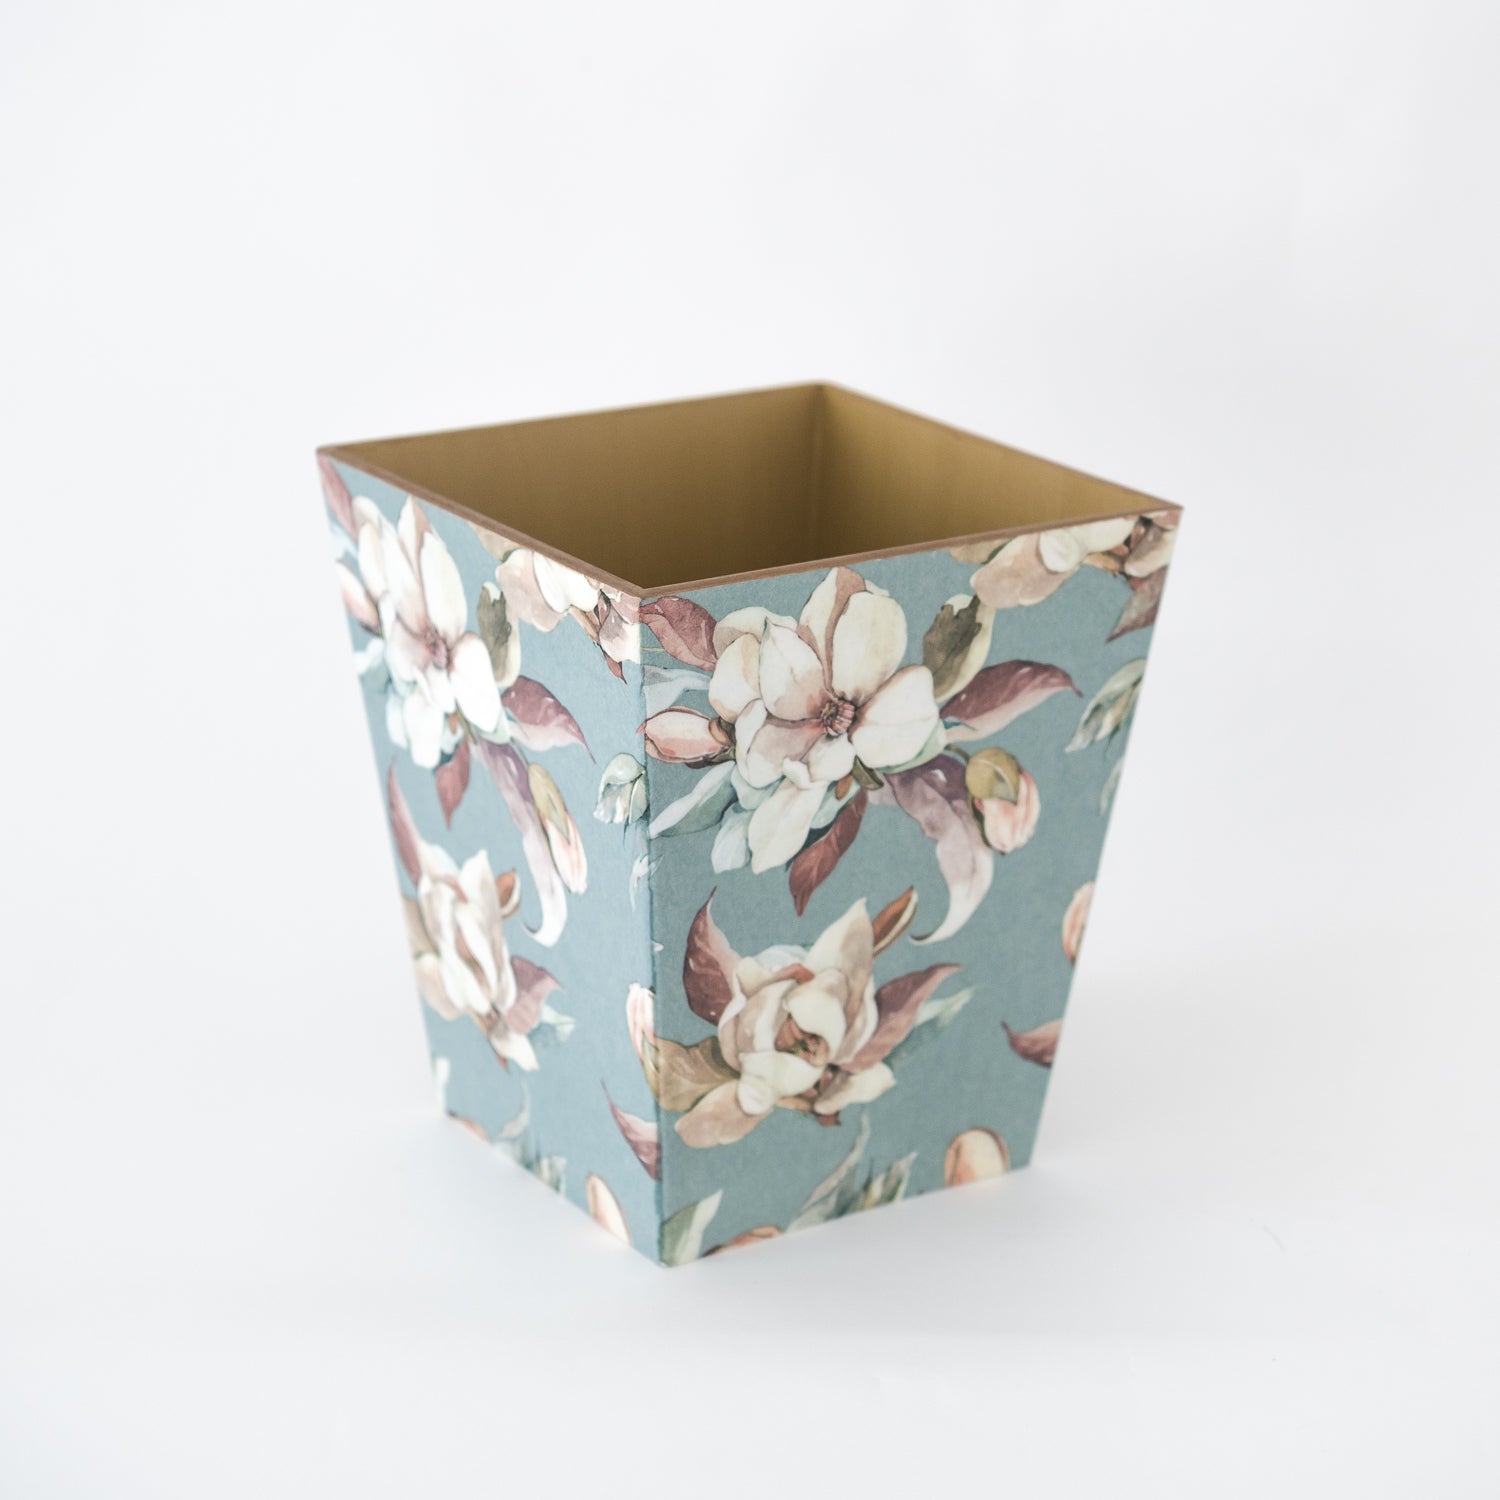 Tissue Box Cover wooden Magnolias